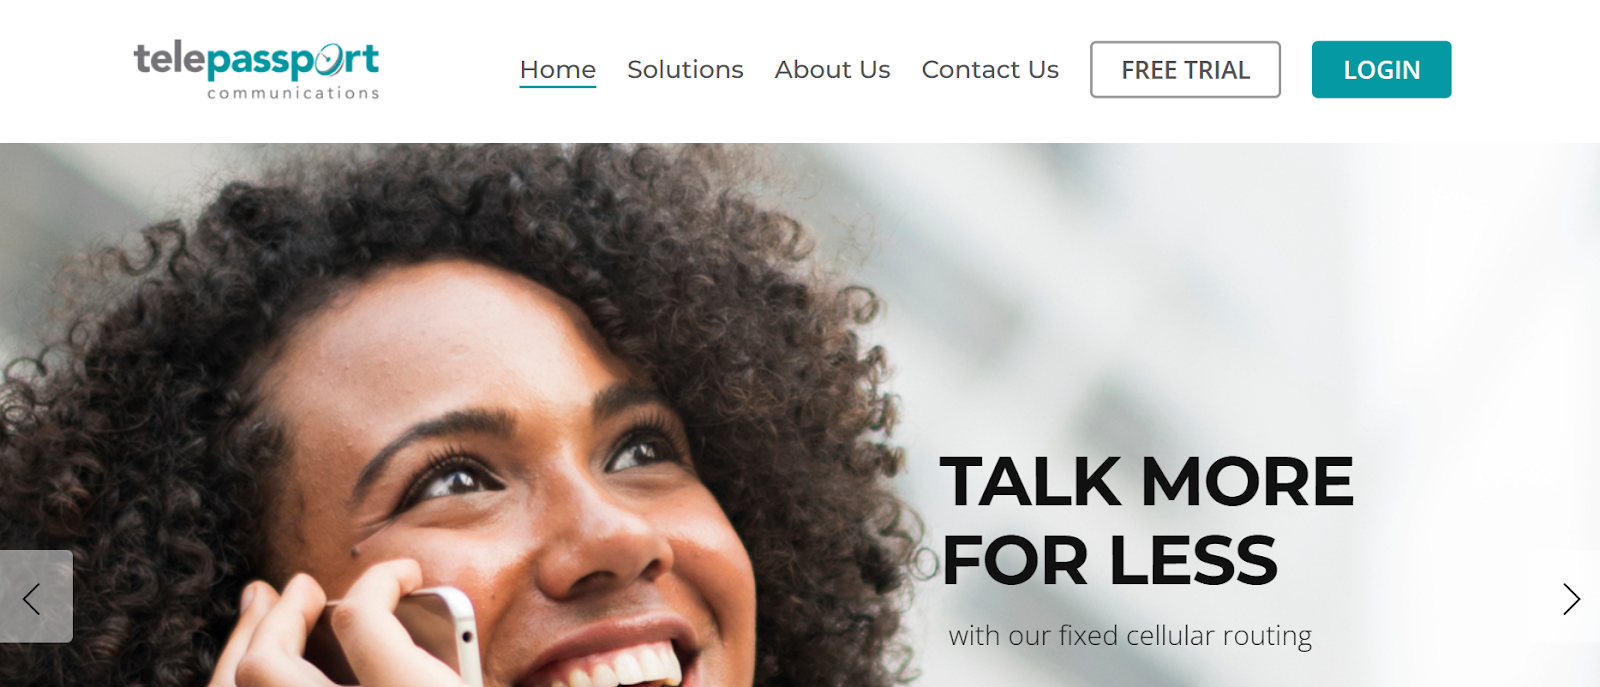 Telepassport website snapshot highlighting the services it offers.